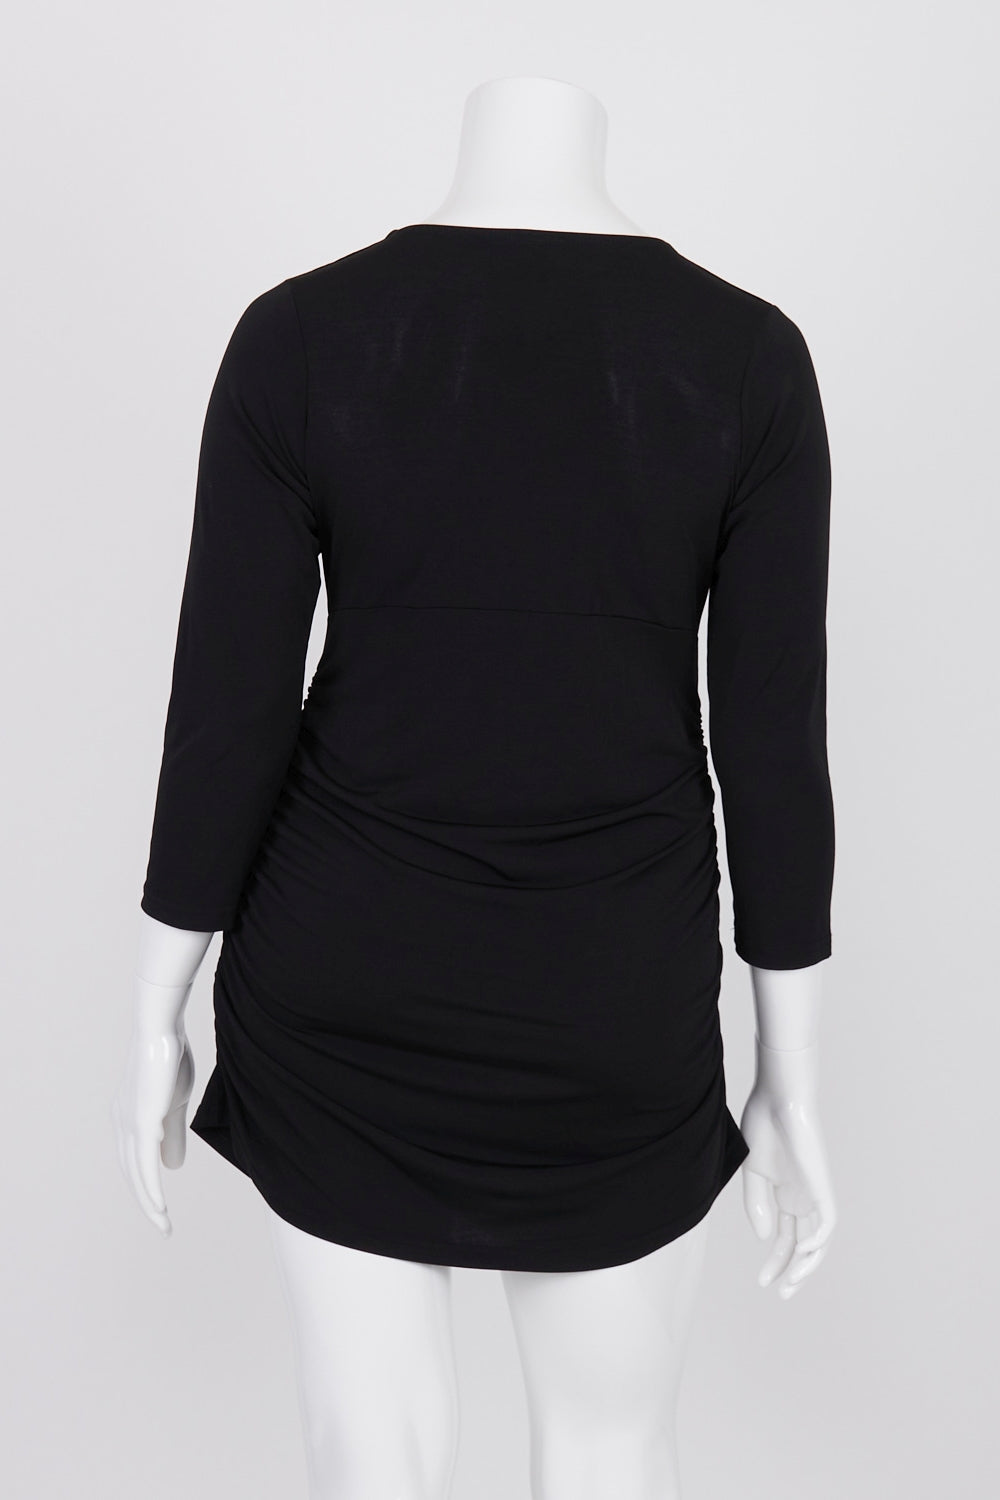 Ripe Black Ruched Side Maternity Dress XL